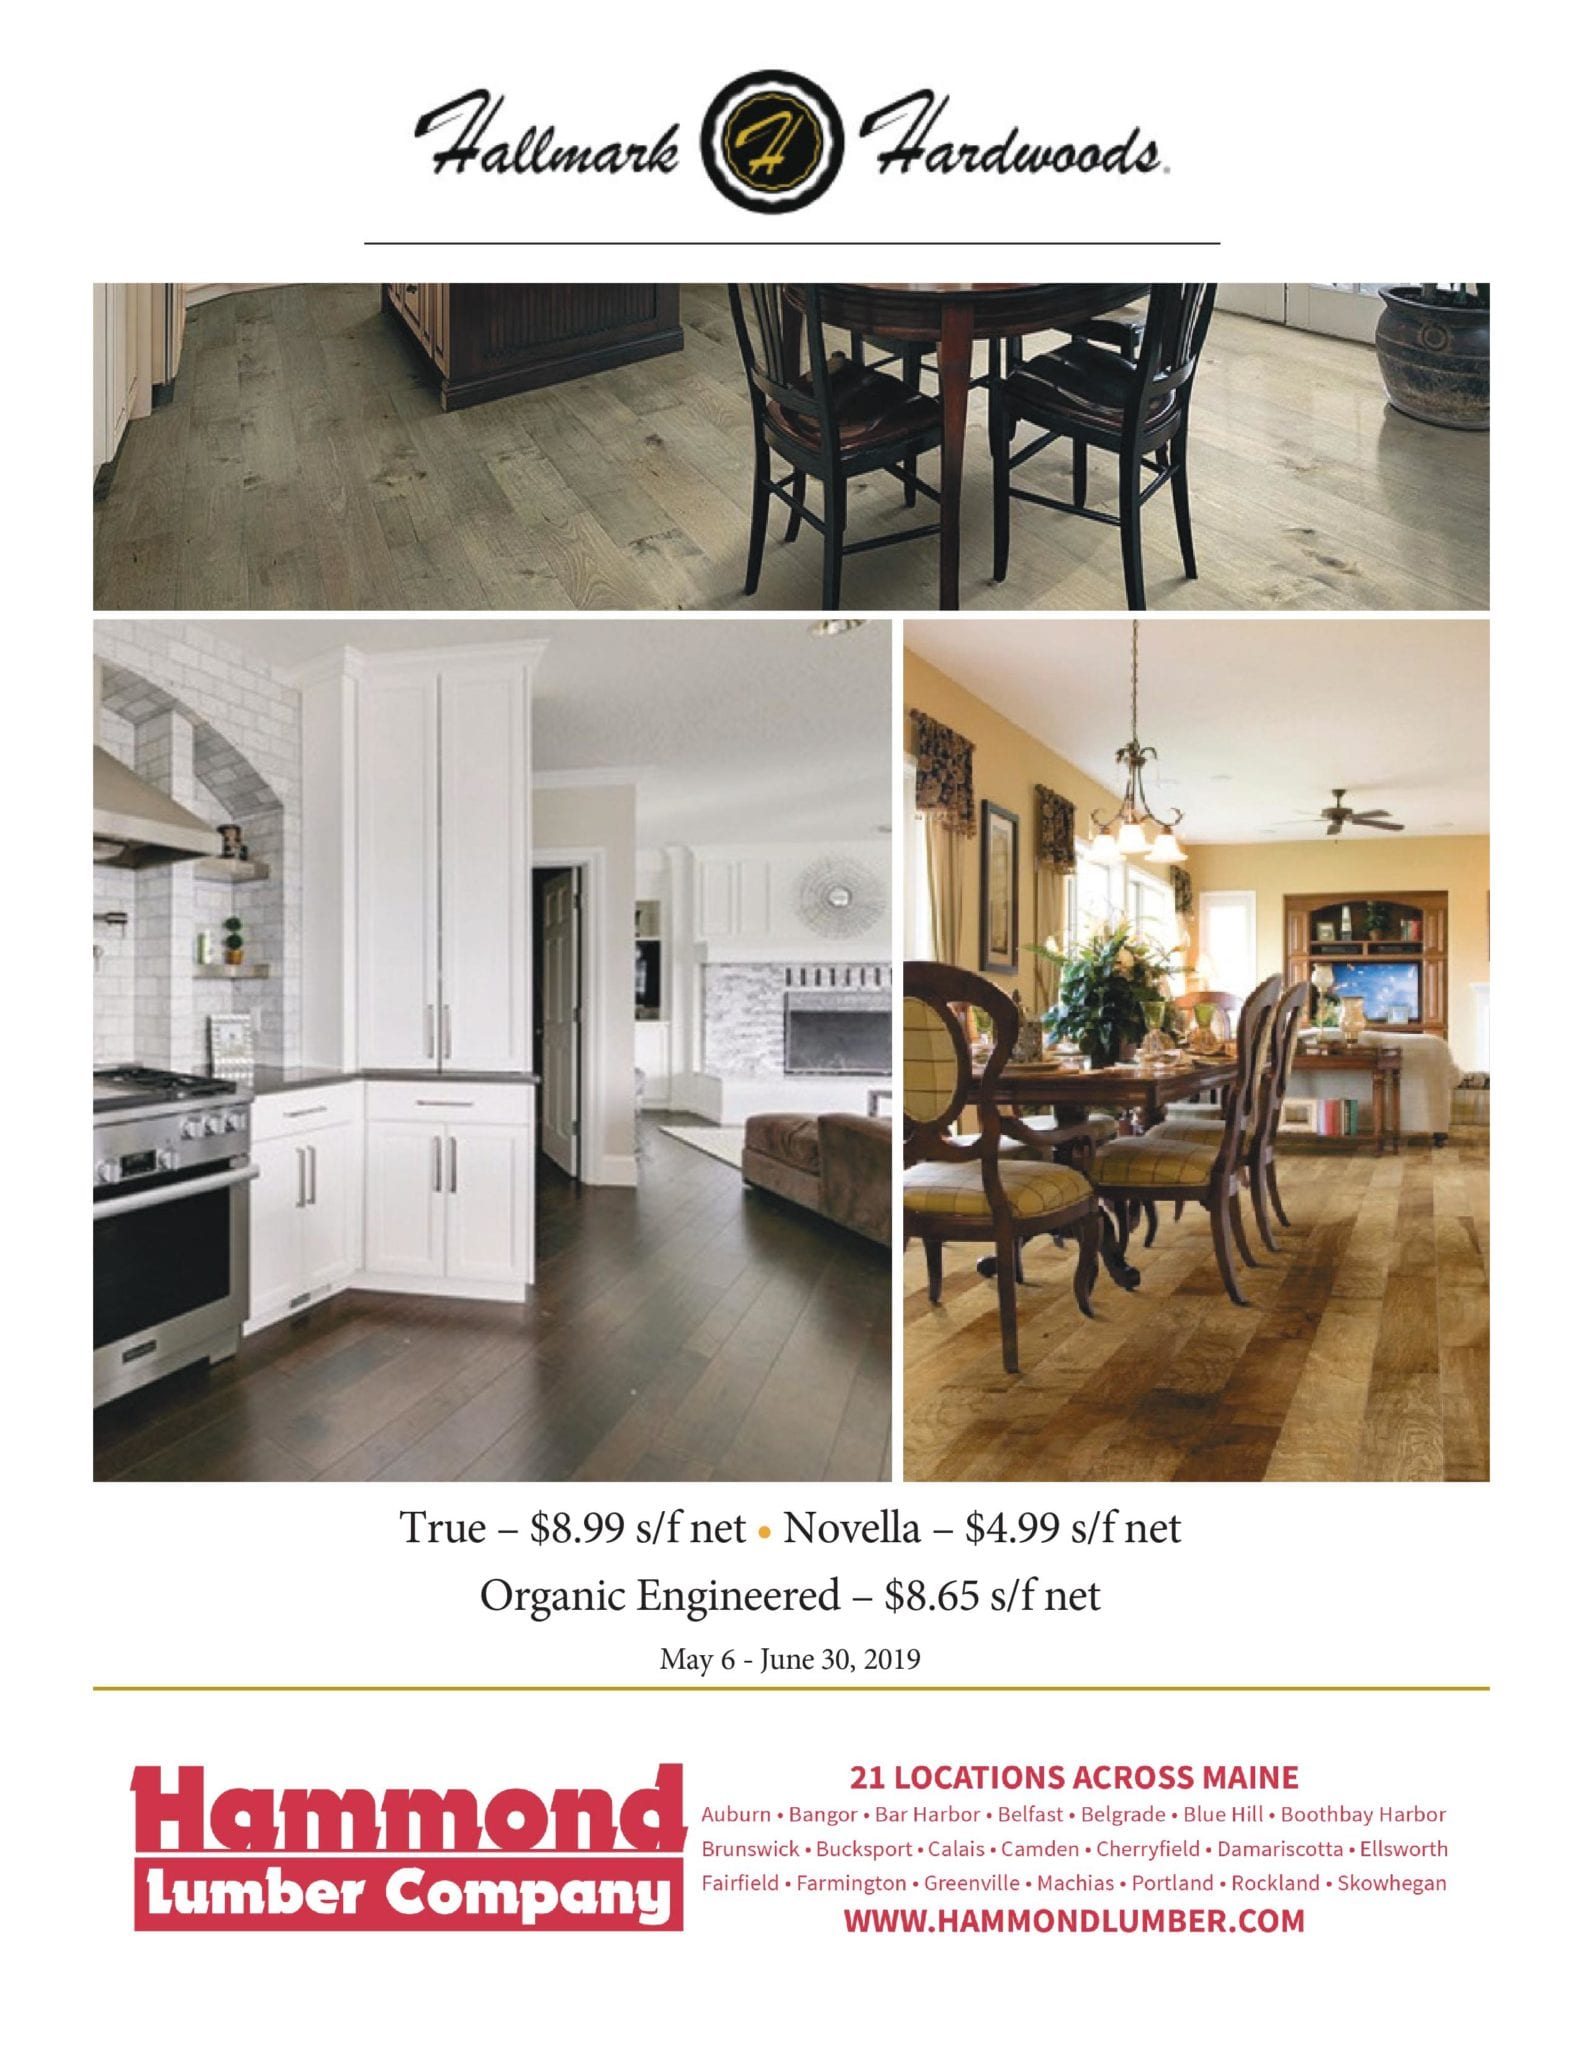 Hallmark Hardwood Flooring Promotion - Hammond Lumber Company